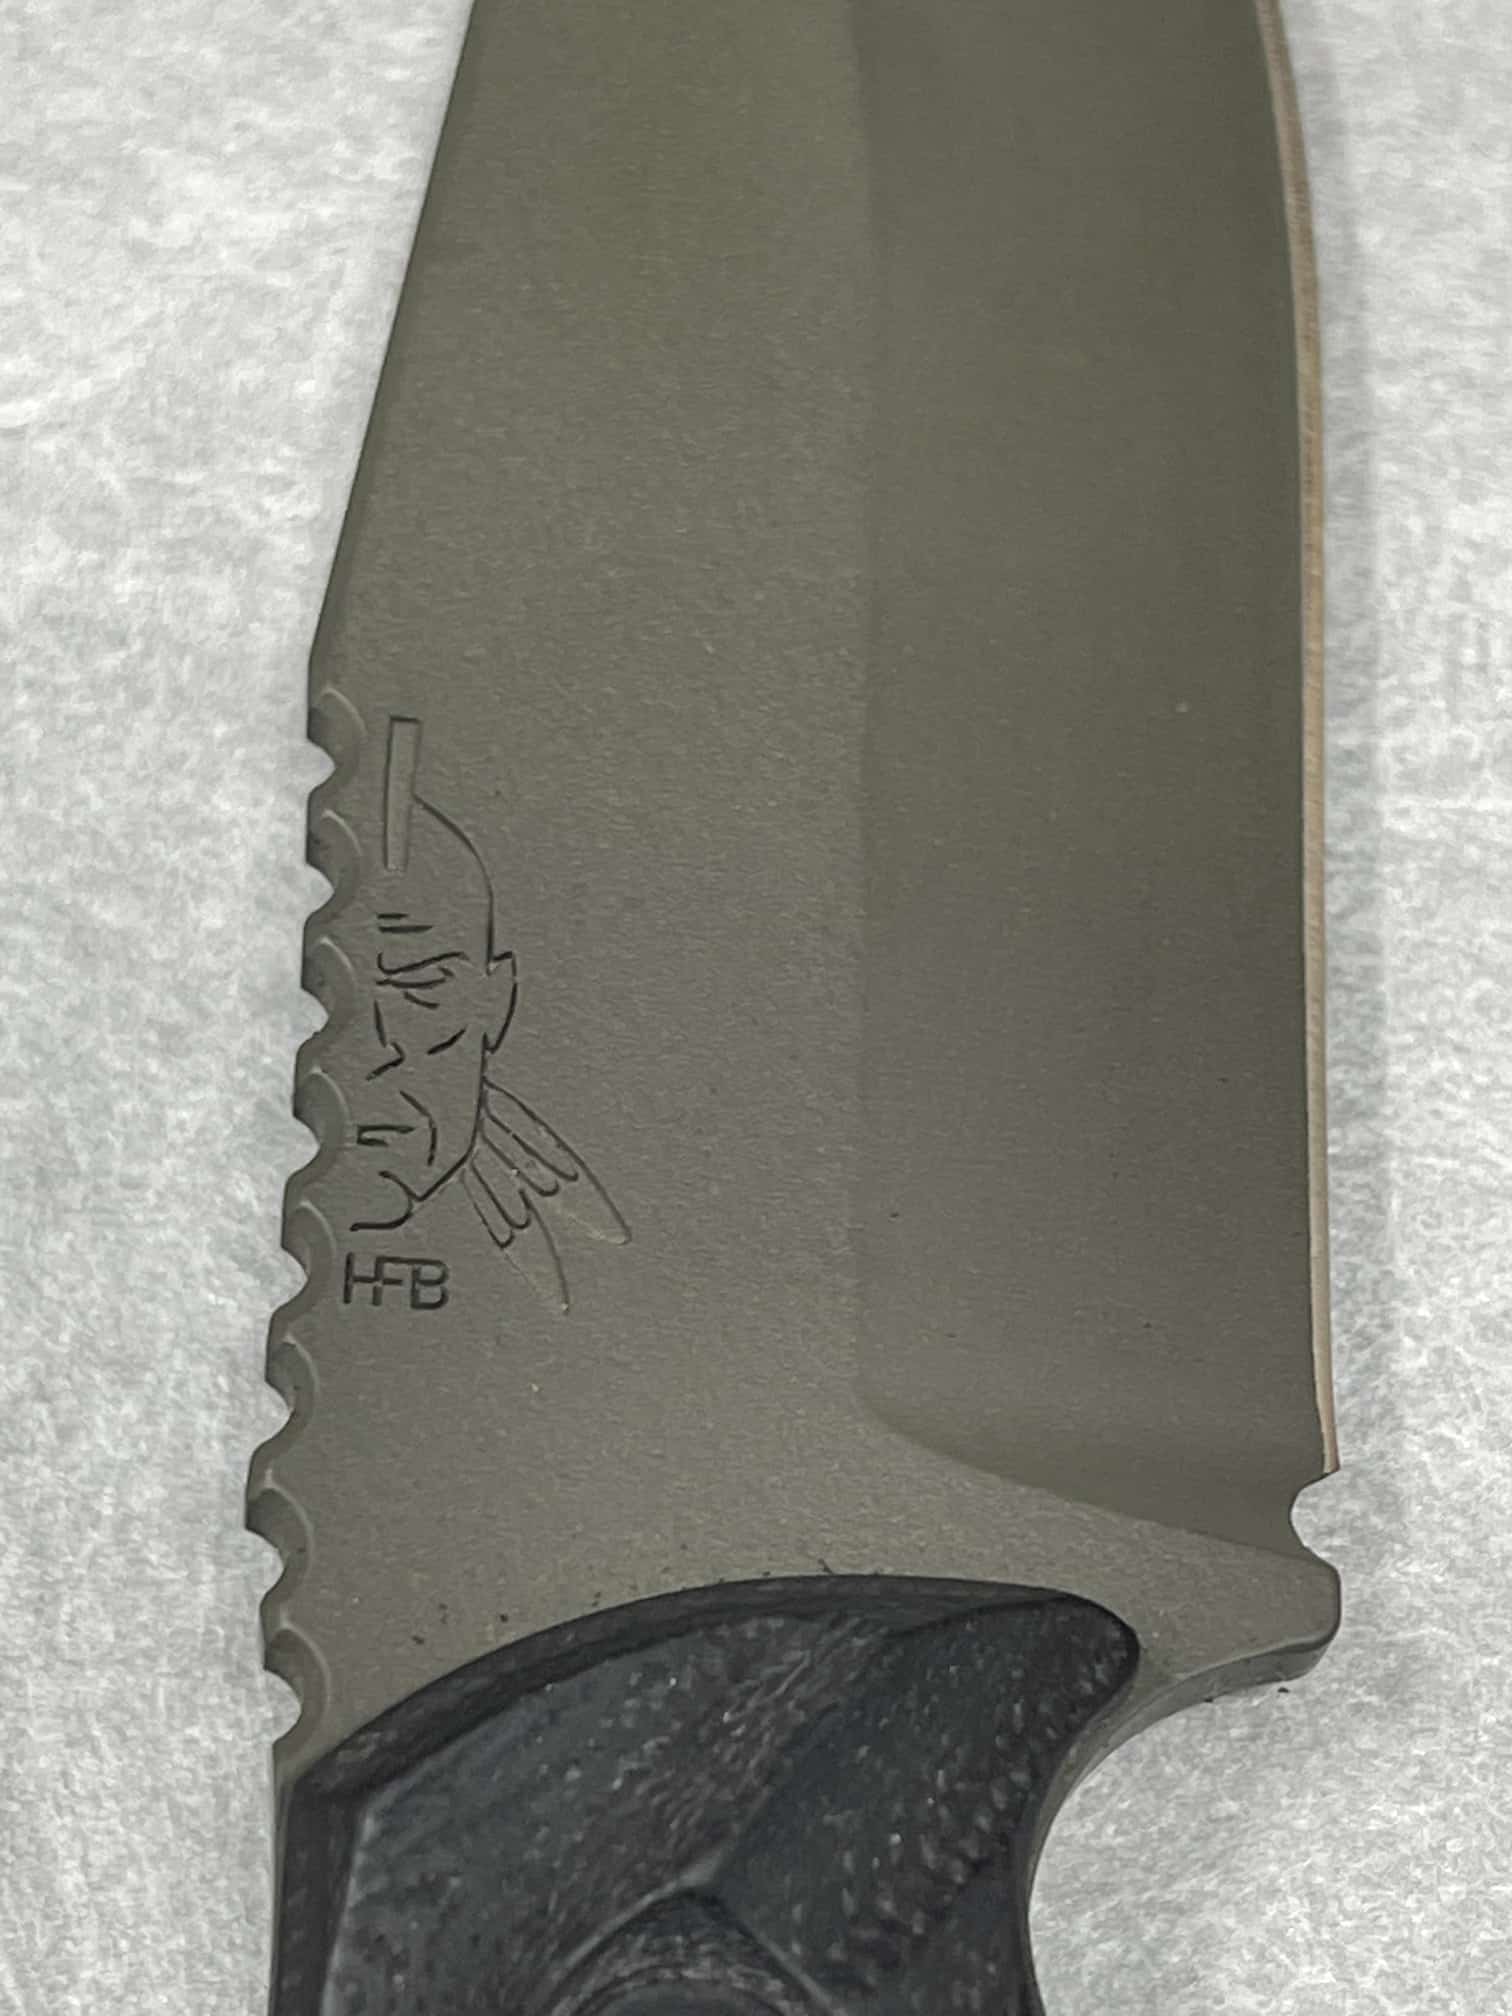 Half Face Blades Crow Jr Blade Hf Grey Cerakote Black G10 Textured Grip Tts Gear Tactical 